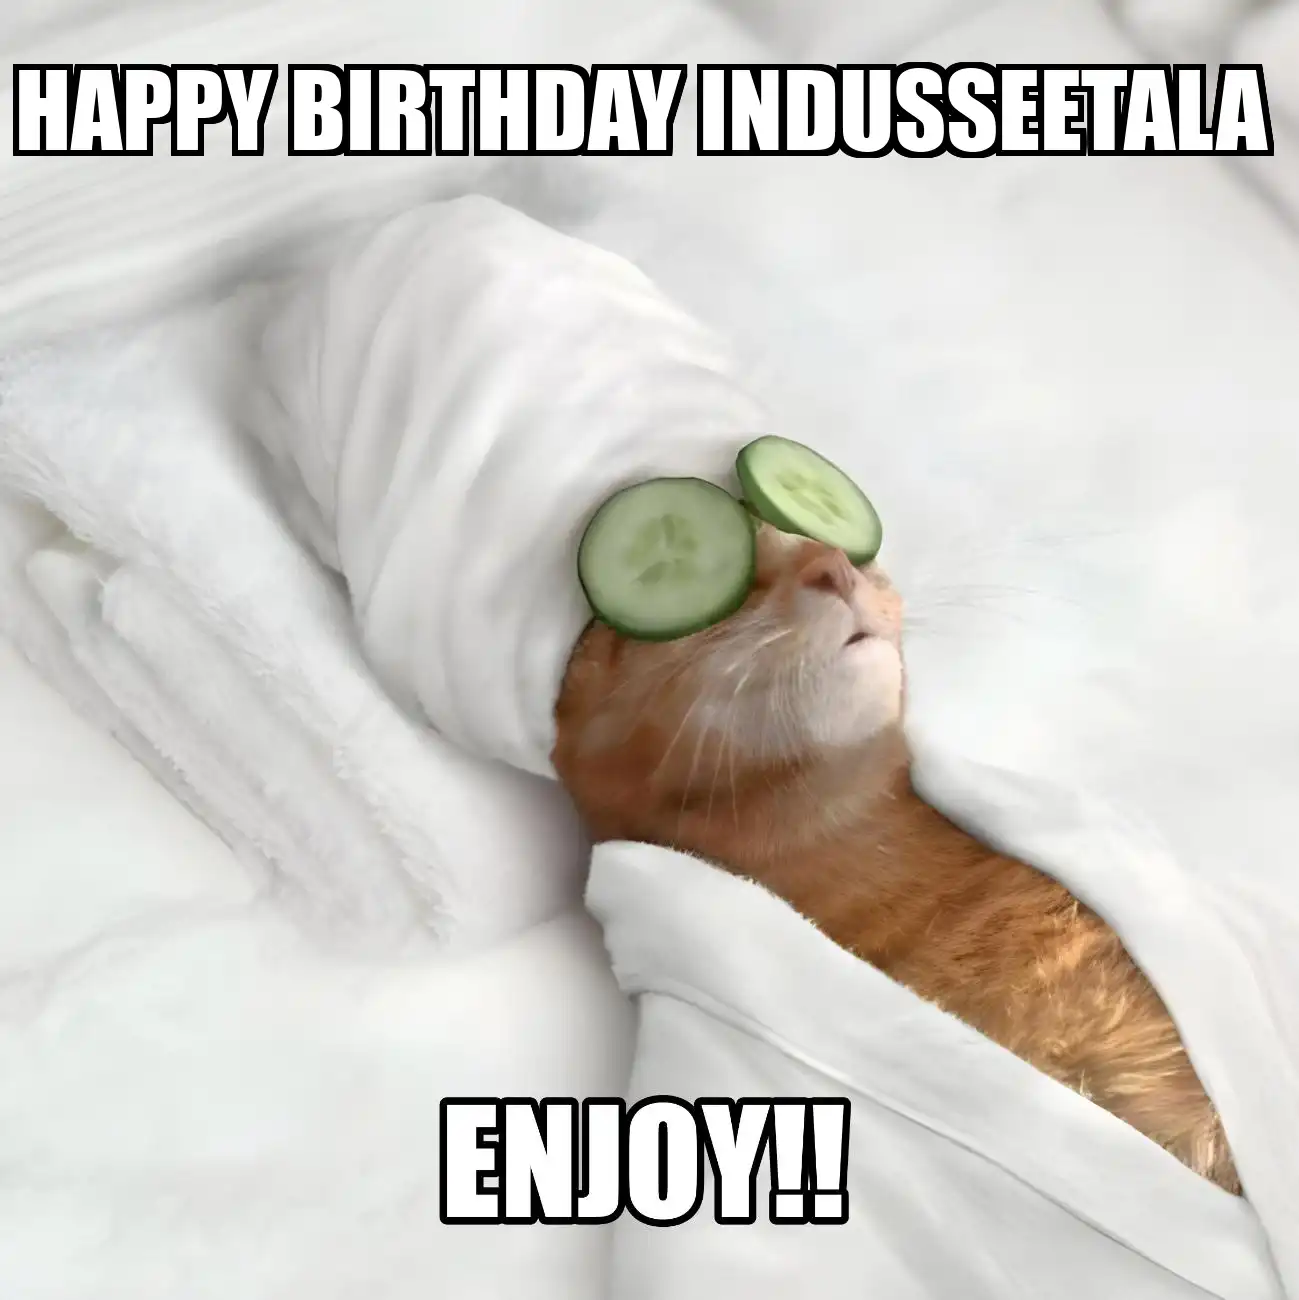 Happy Birthday Indusseetala Enjoy Cat Meme